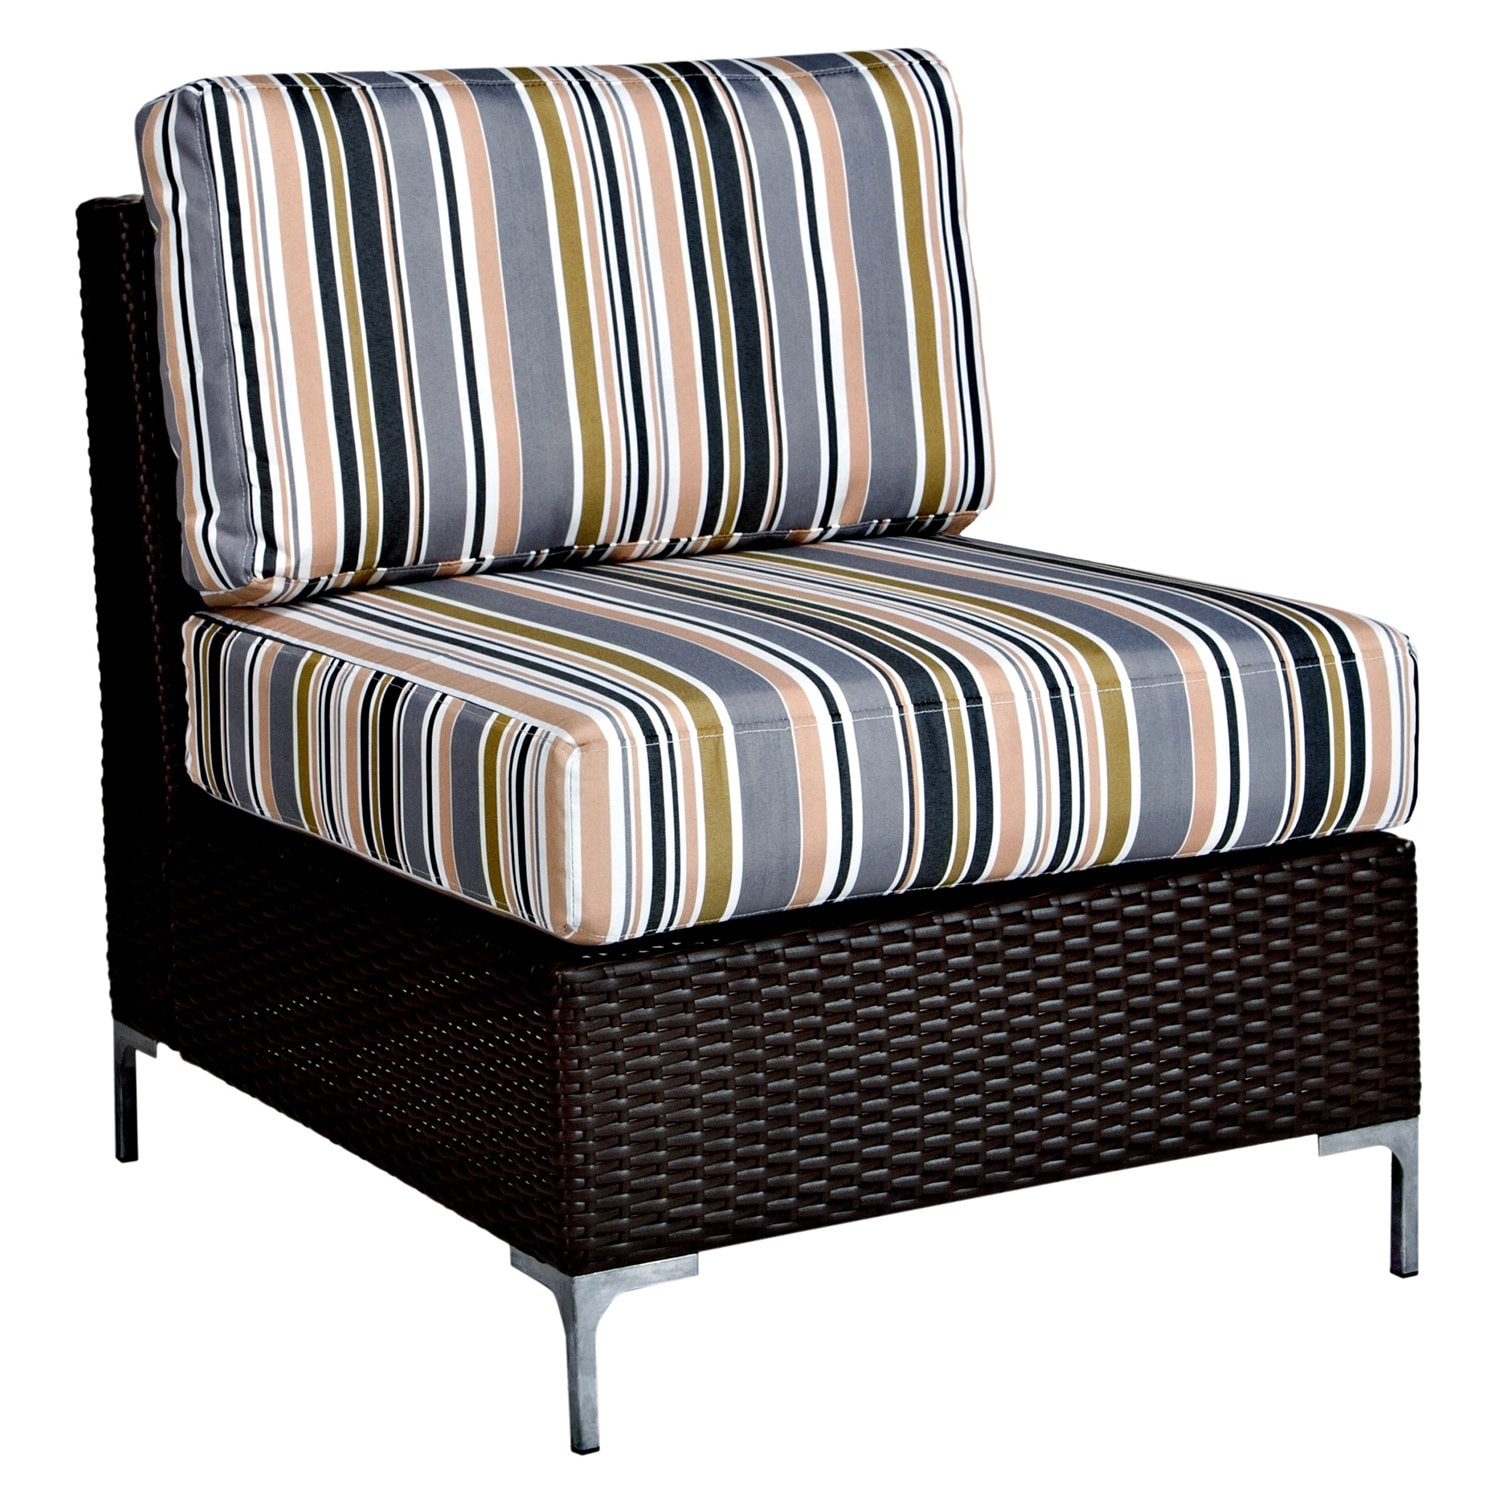 Angelohome Napa Springs Newport Stripe Armless Chair Indoor/outdoor Resin Wicker